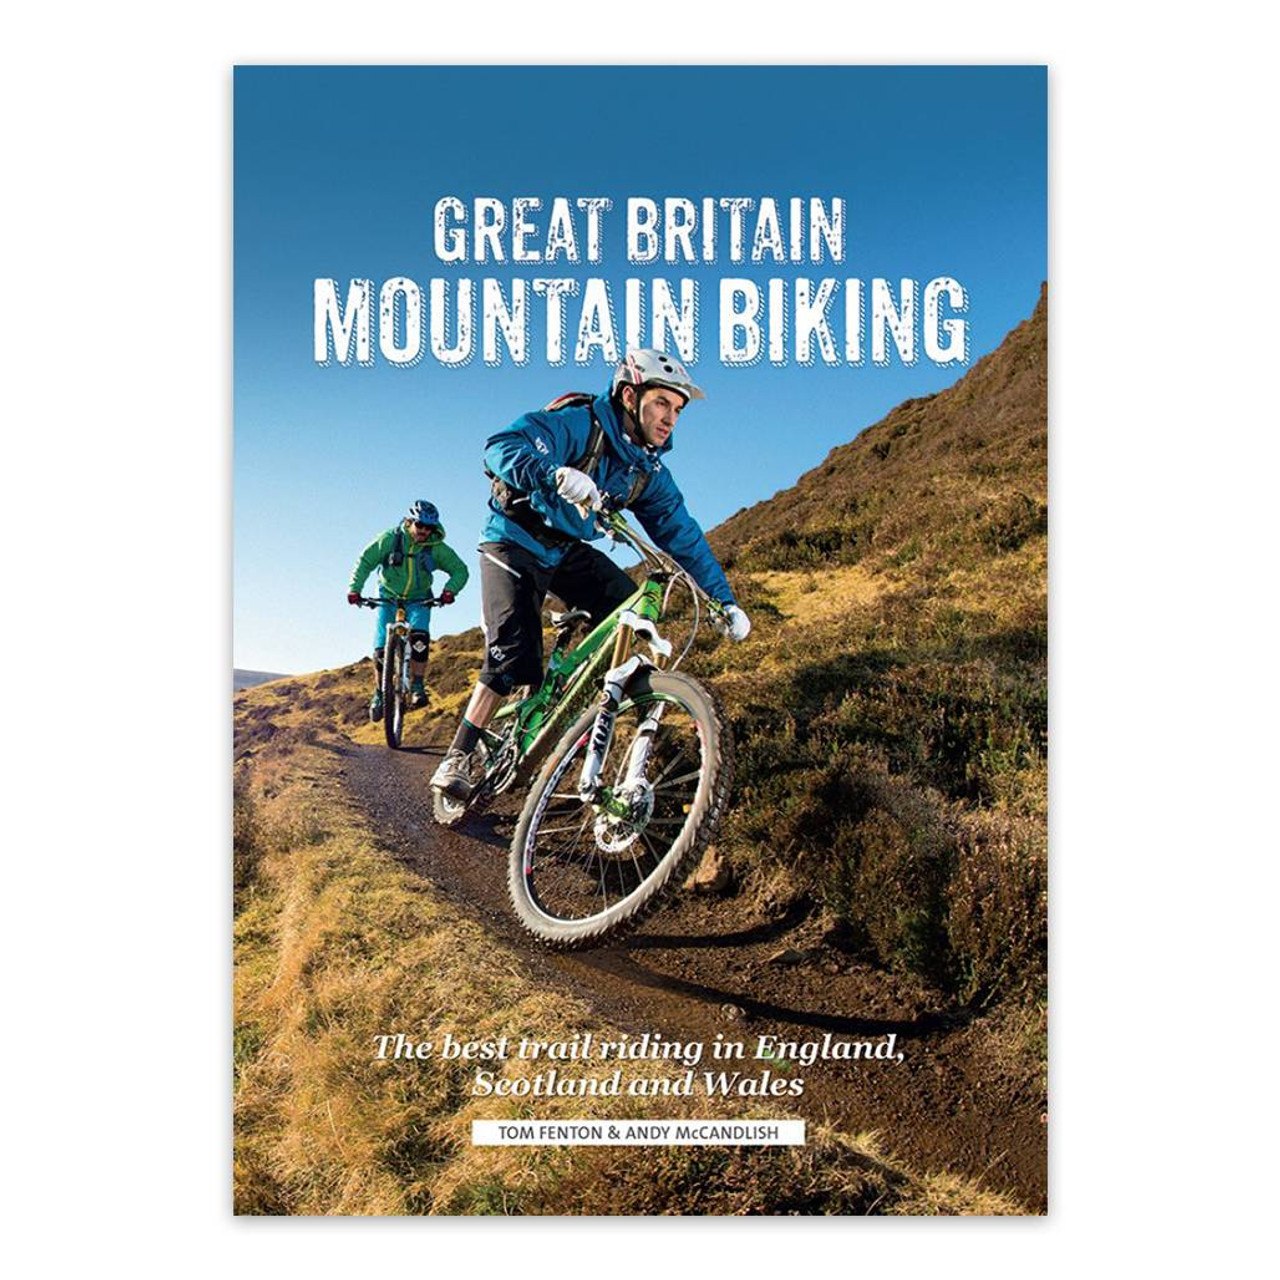 Great Britain Mountain Biking